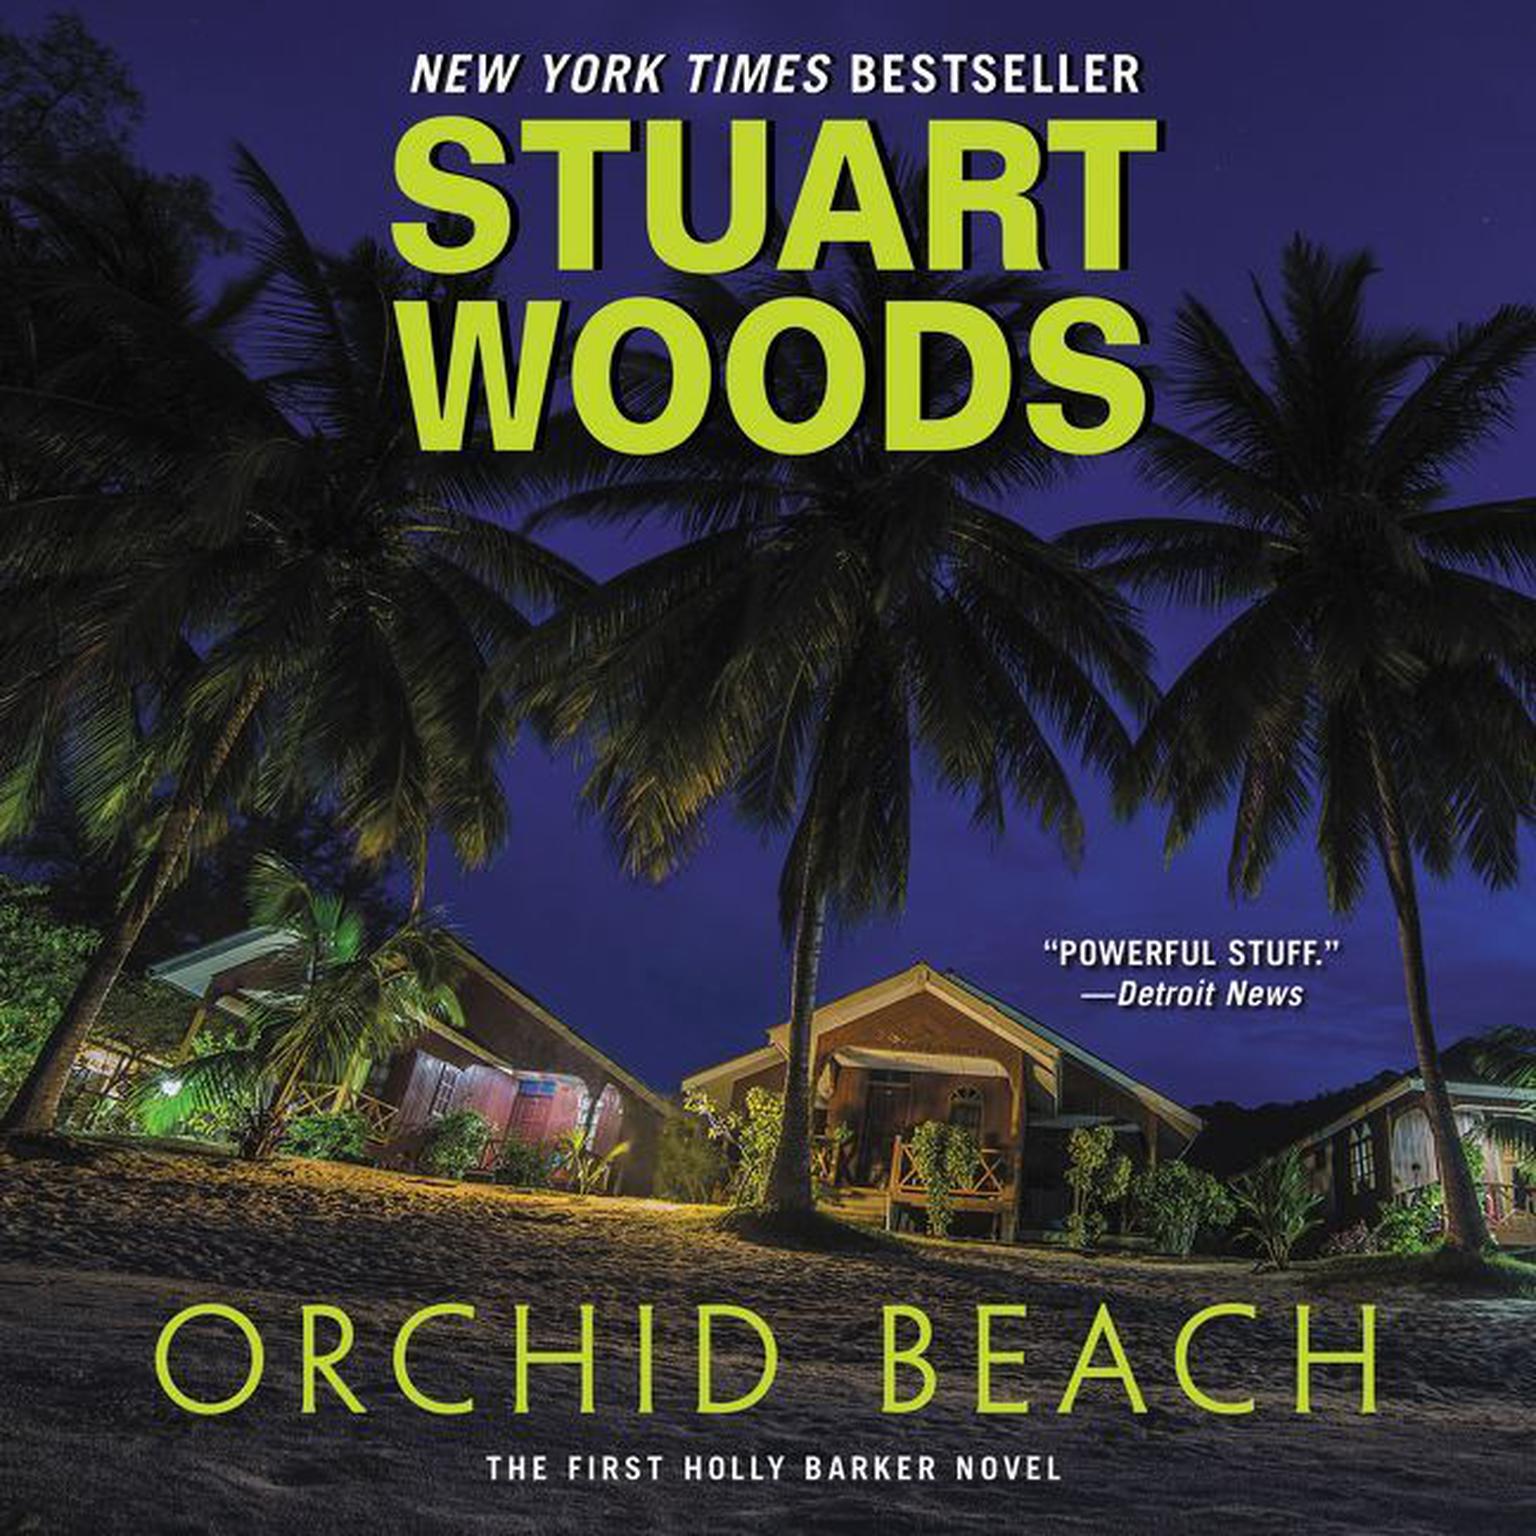 Orchid Beach Audiobook, by Stuart Woods